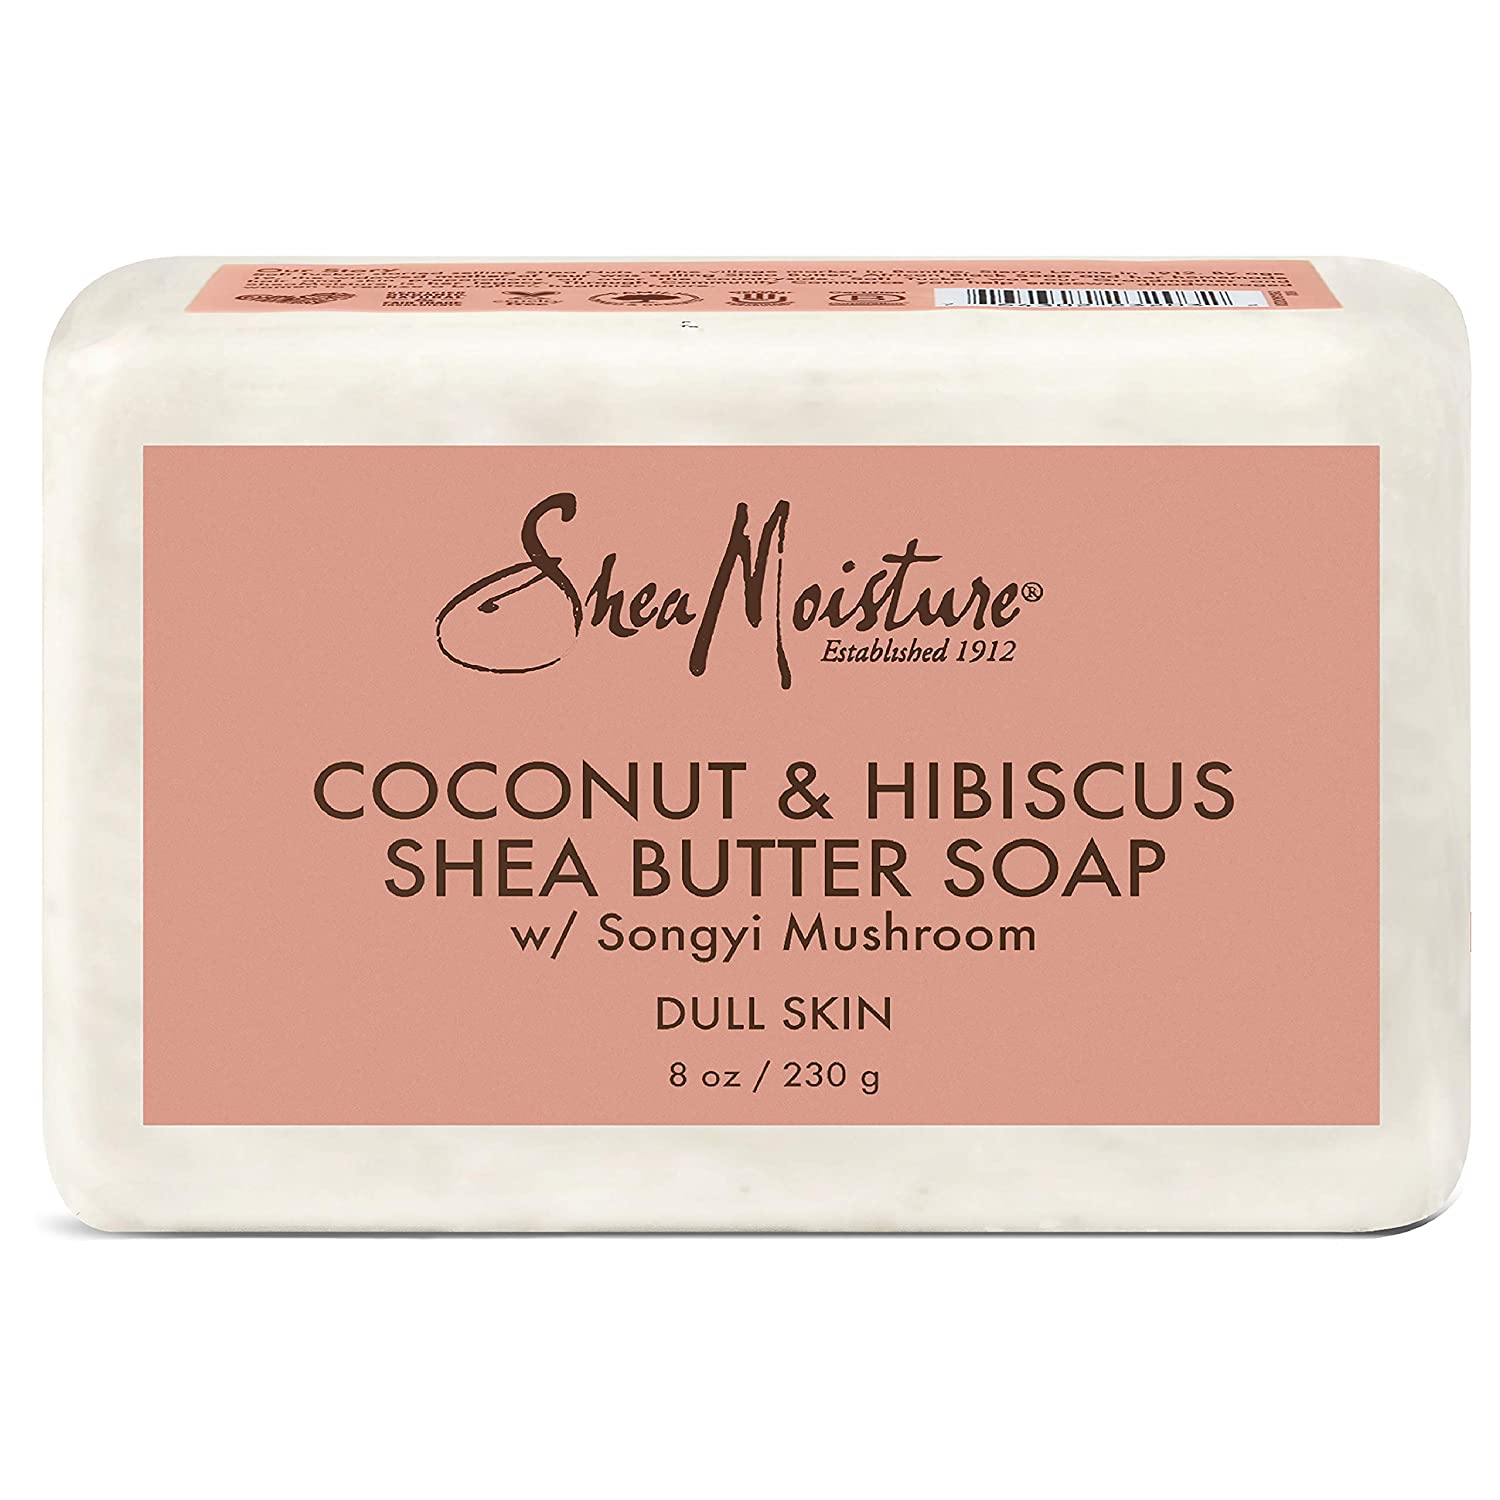 shea moisture bar soap on a white background